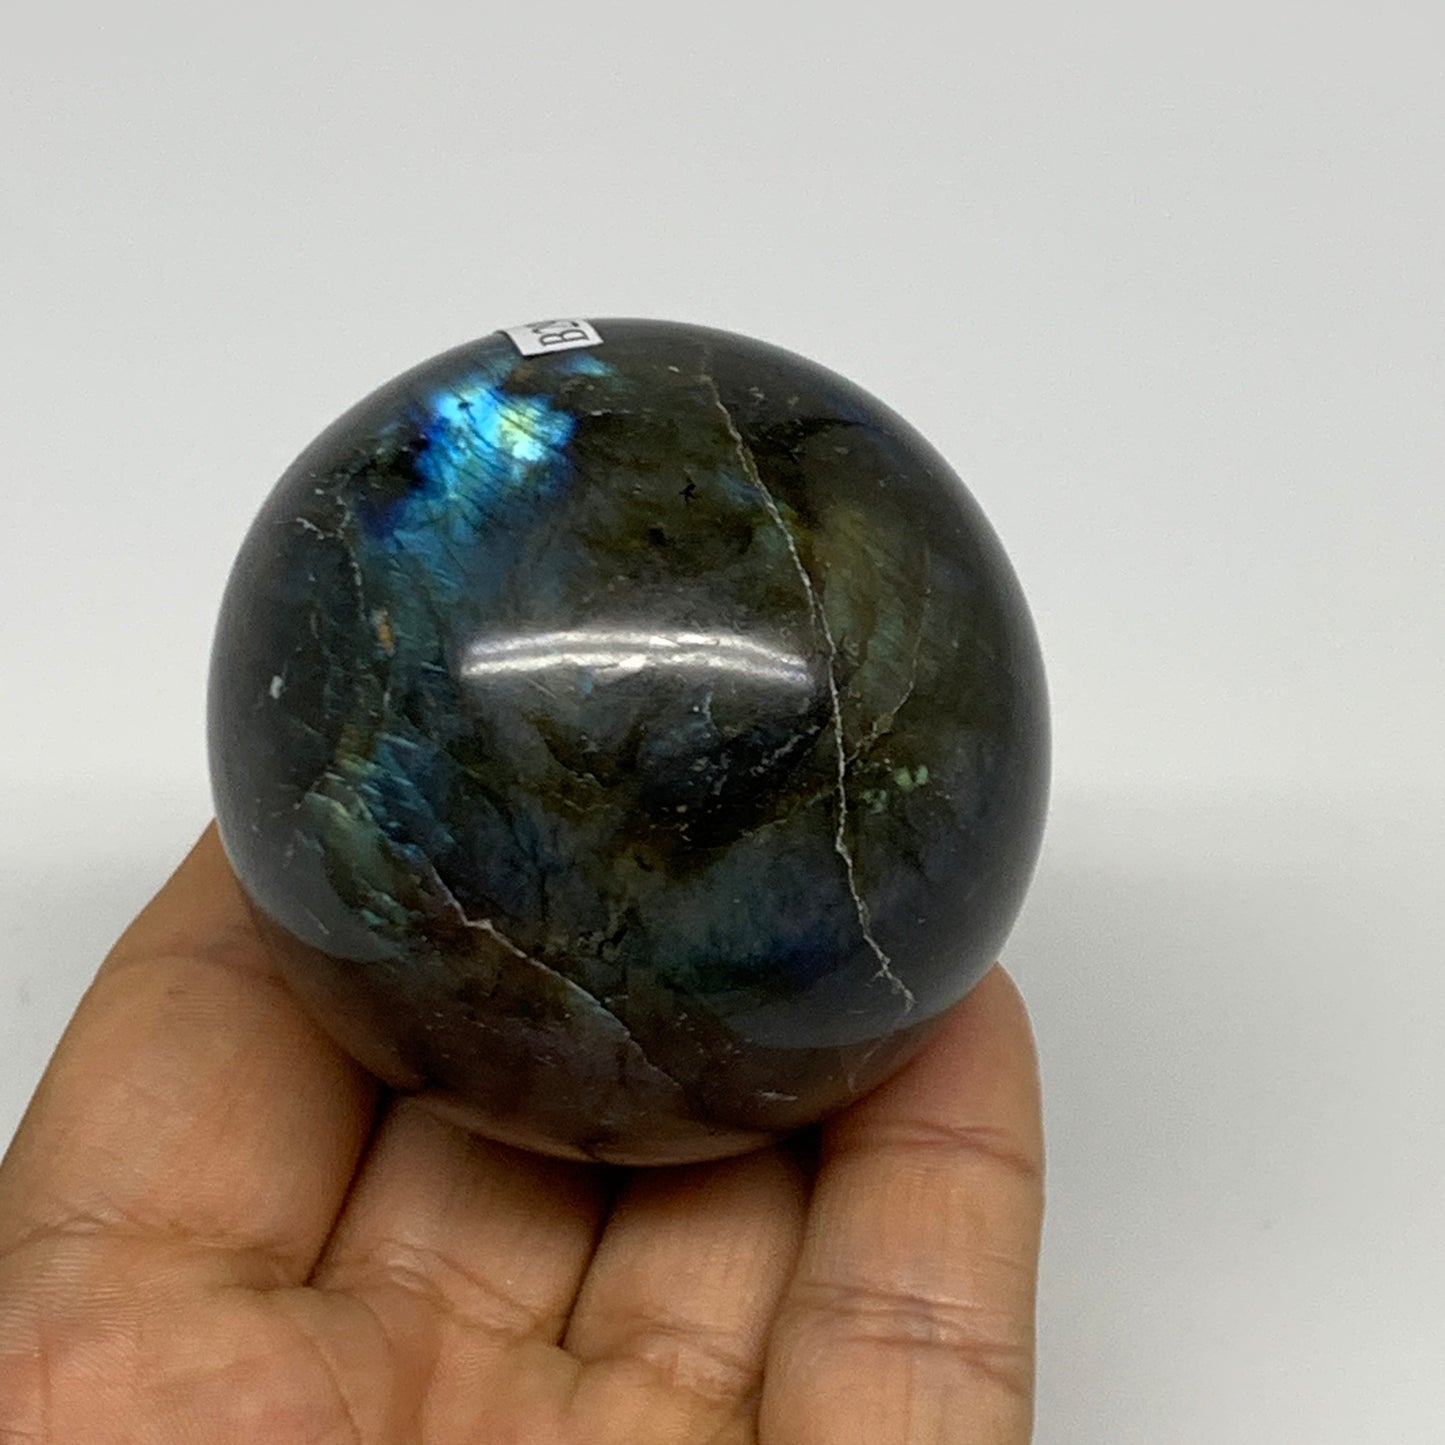 239.2g, 2.1"(54mm), Labradorite Sphere Gemstone,Crystal @Madagascar, B29867